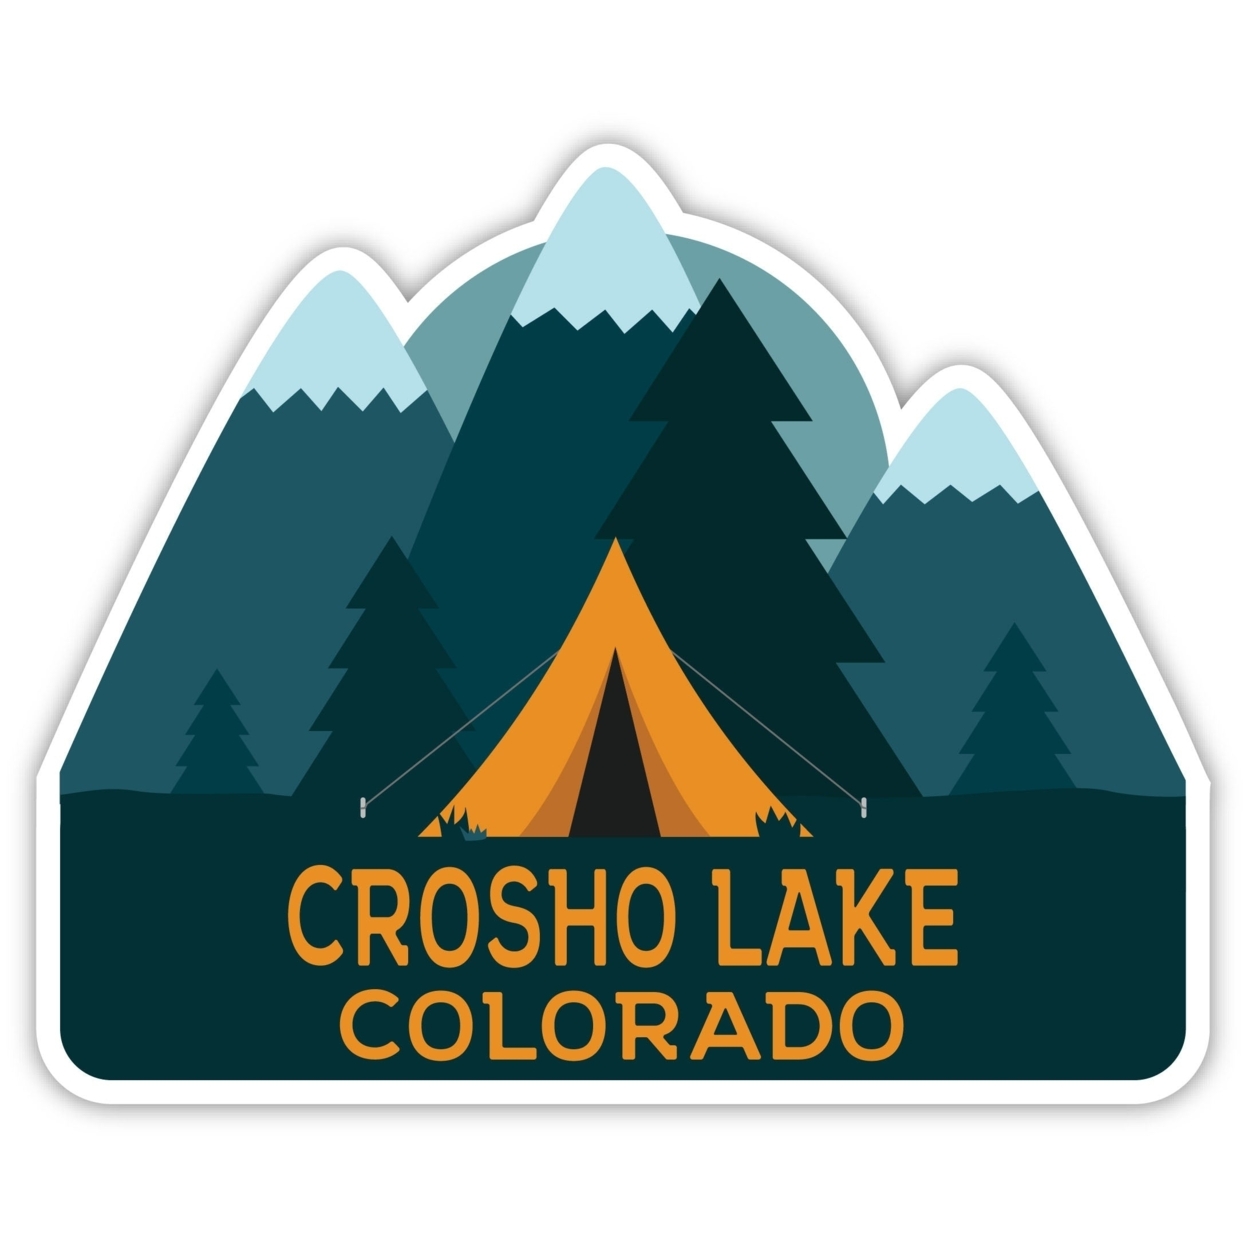 Crosho Lake Colorado Souvenir Decorative Stickers (Choose Theme And Size) - Single Unit, 6-Inch, Tent